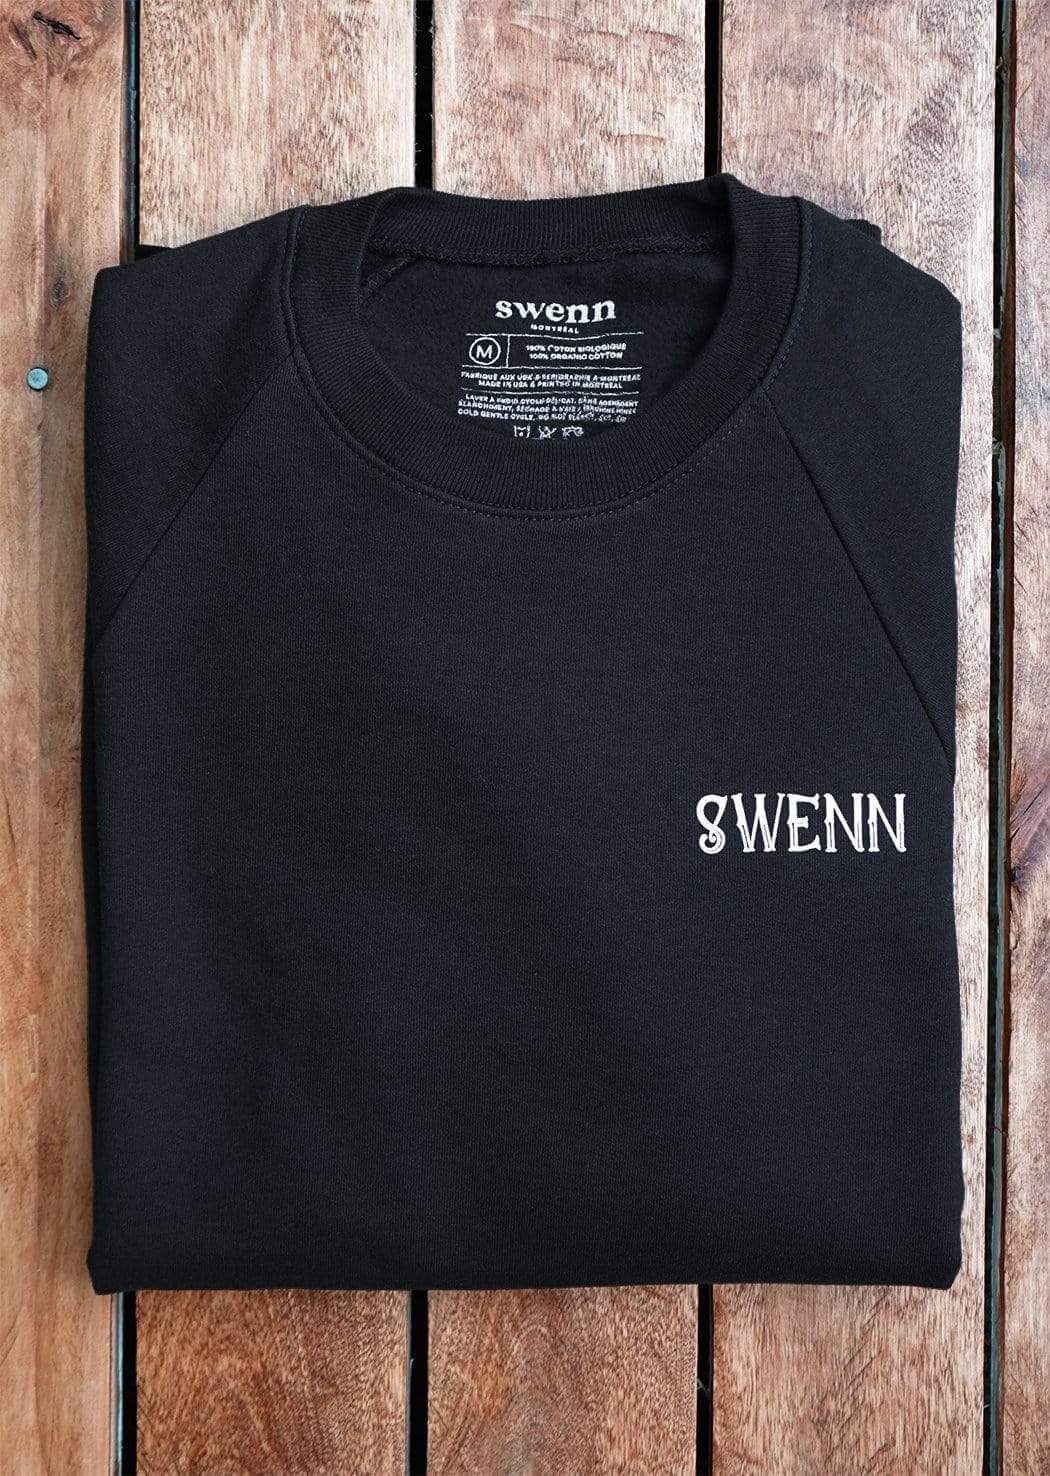 SWENN Sweatshirt SWENN, Sweatshirt Mermaid (Unisex/Black), Organic Cotton